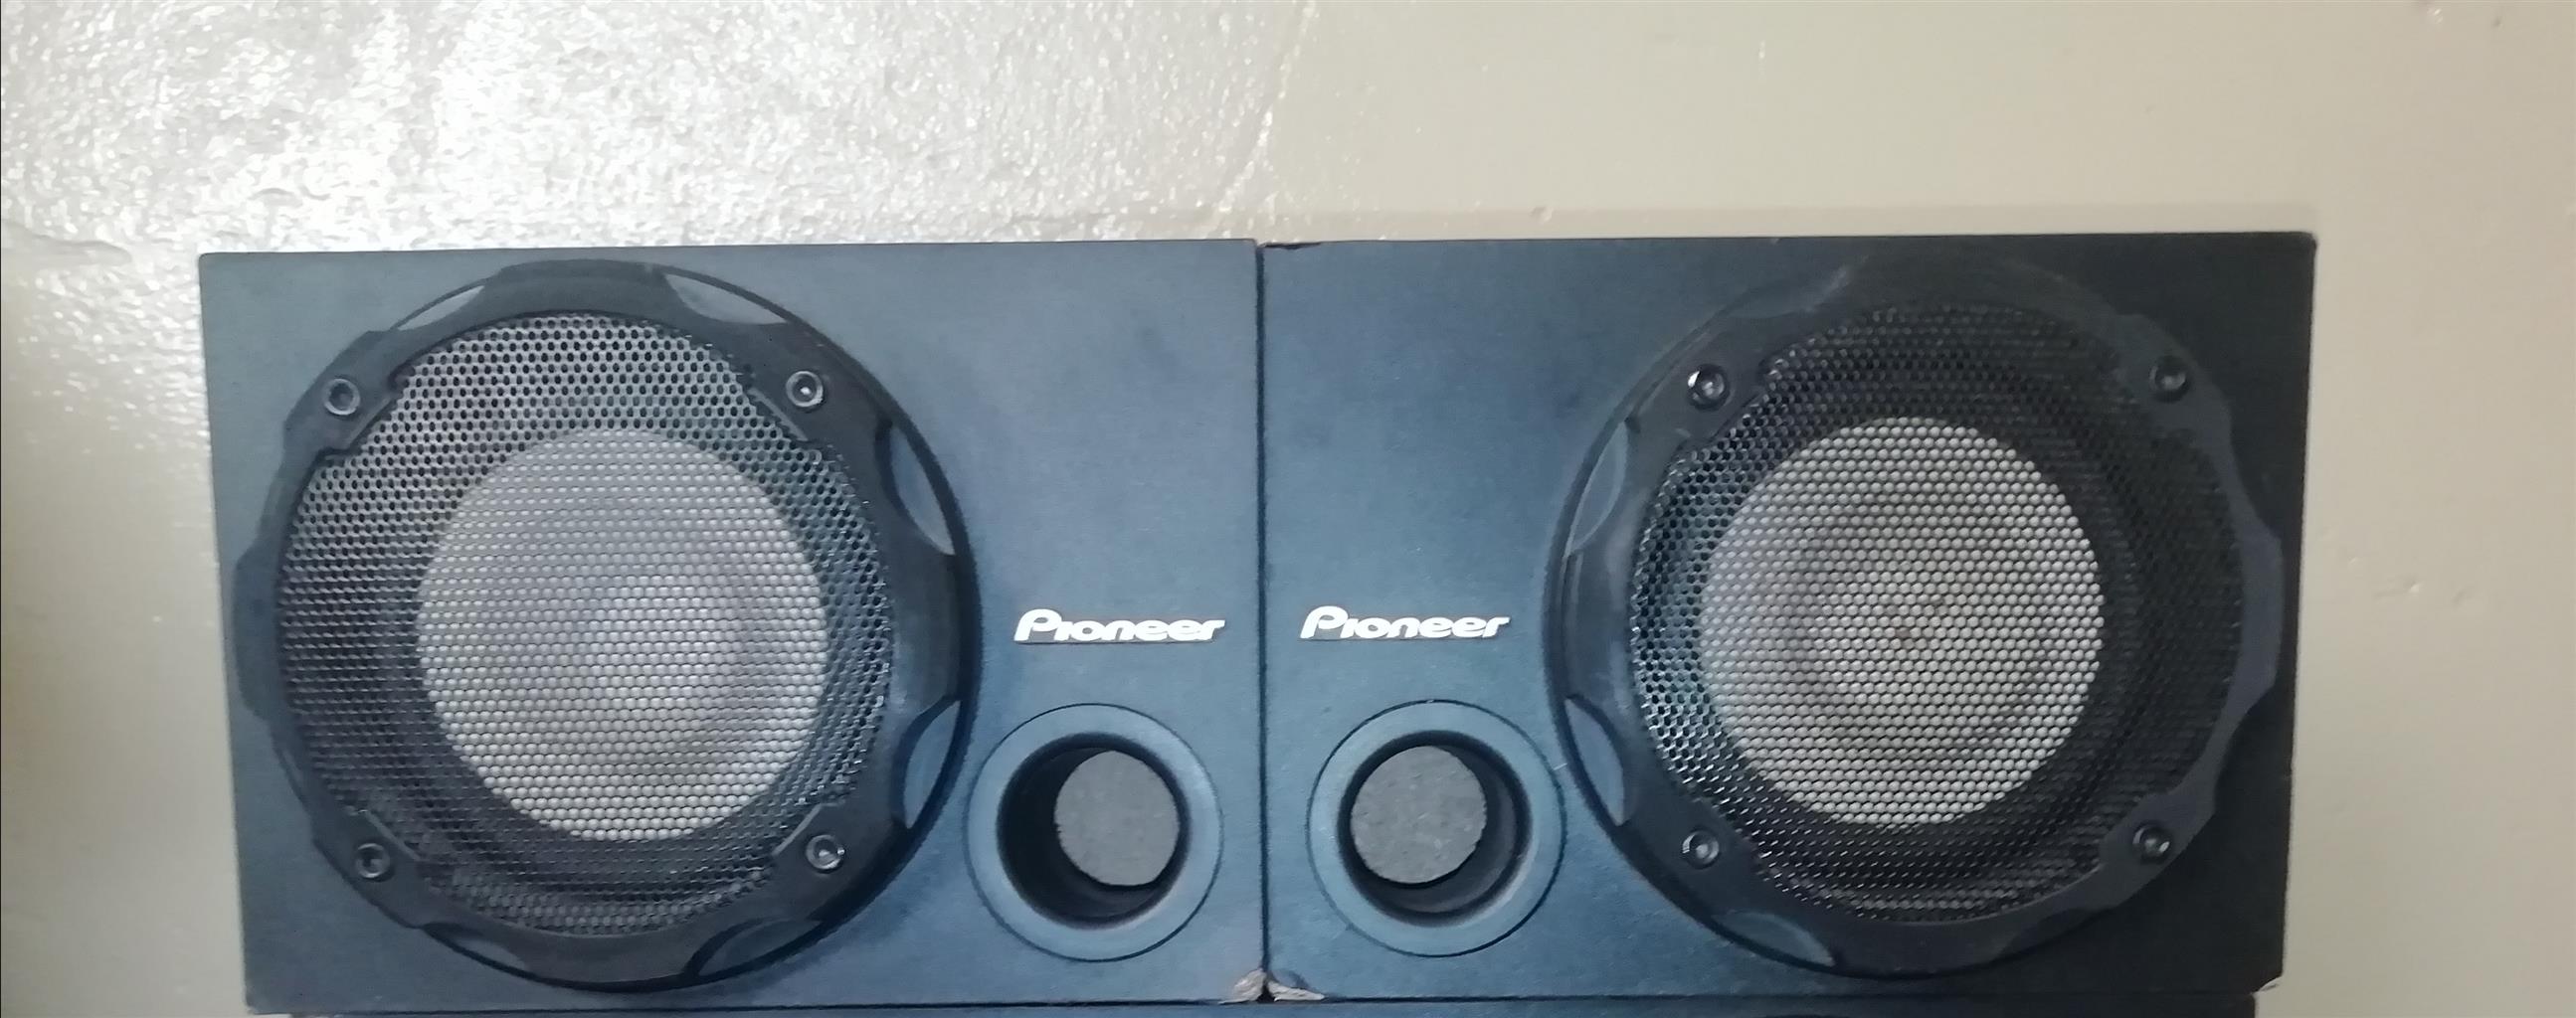 Pioneer Todoroki Surround Sound Speakers 